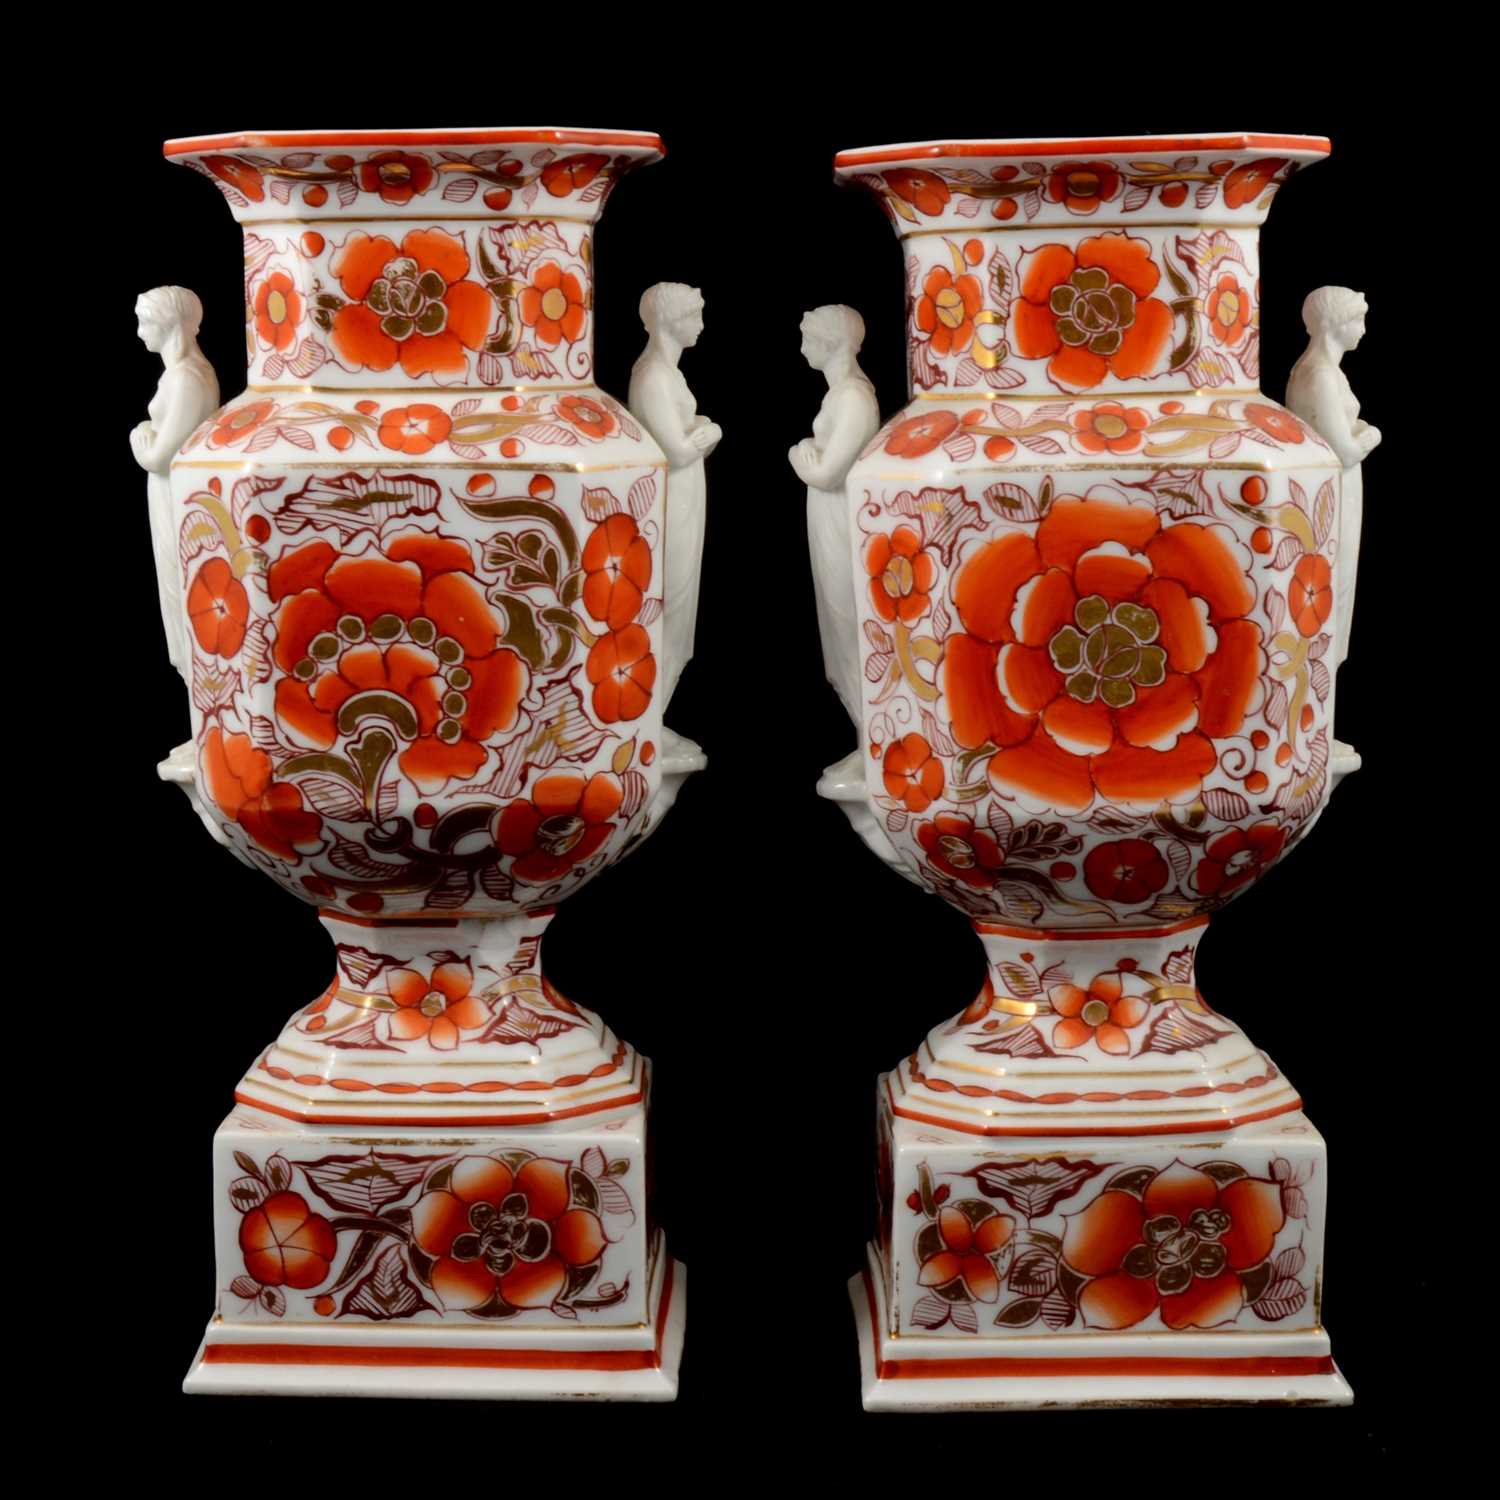 Lot 11 - Pair of French porcelain urn shaped vases